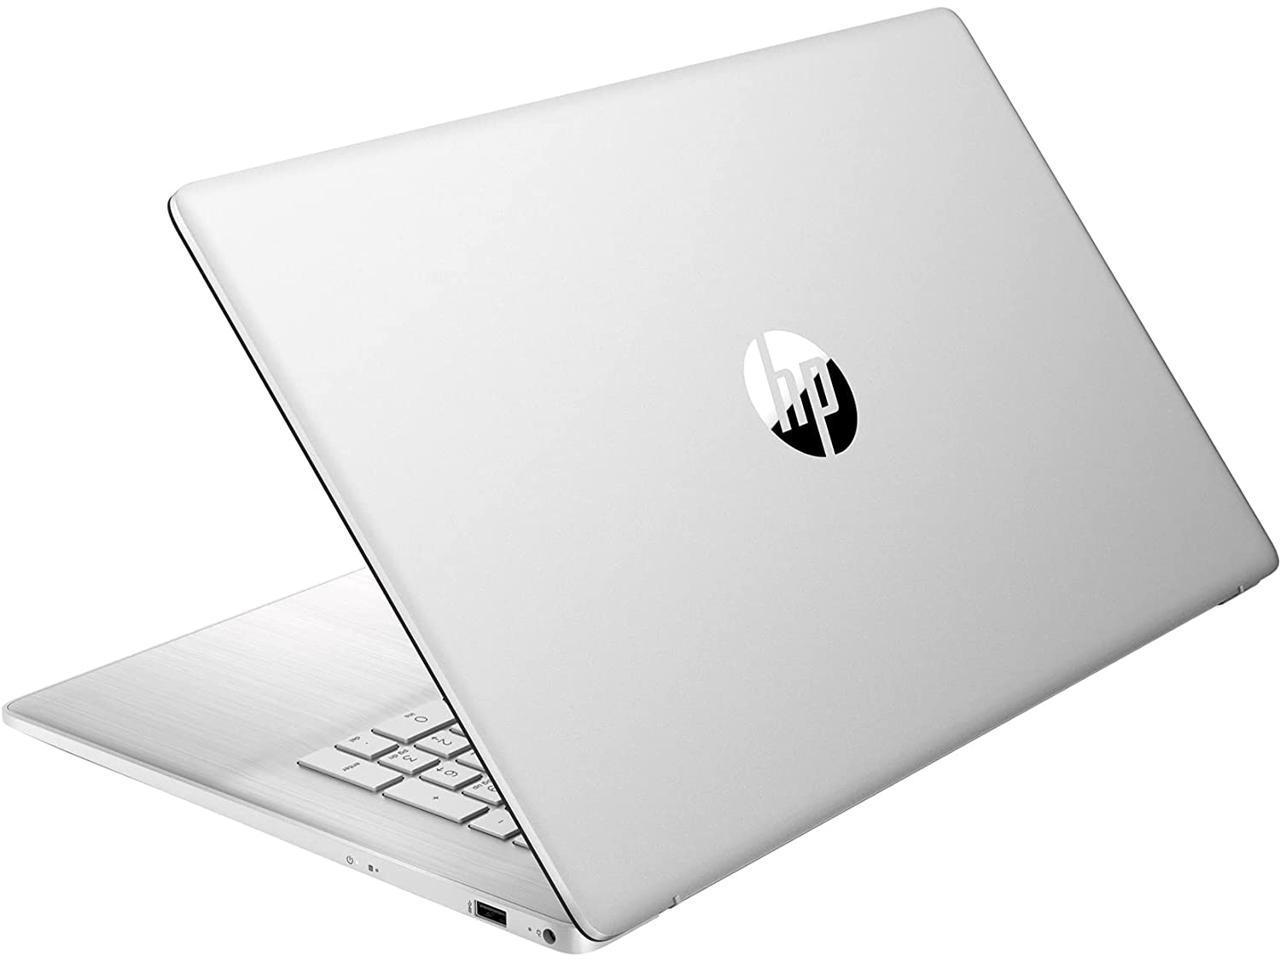 Hp 17T Laptop, 17.3" Hd+ Touchscreen, Intel Core I7-1165G7 Processor, 32Gb Ram, 1Tb Pcie Ssd, Wi-Fi 6, Backlit Keyboard, Windows 10 Home, Silver